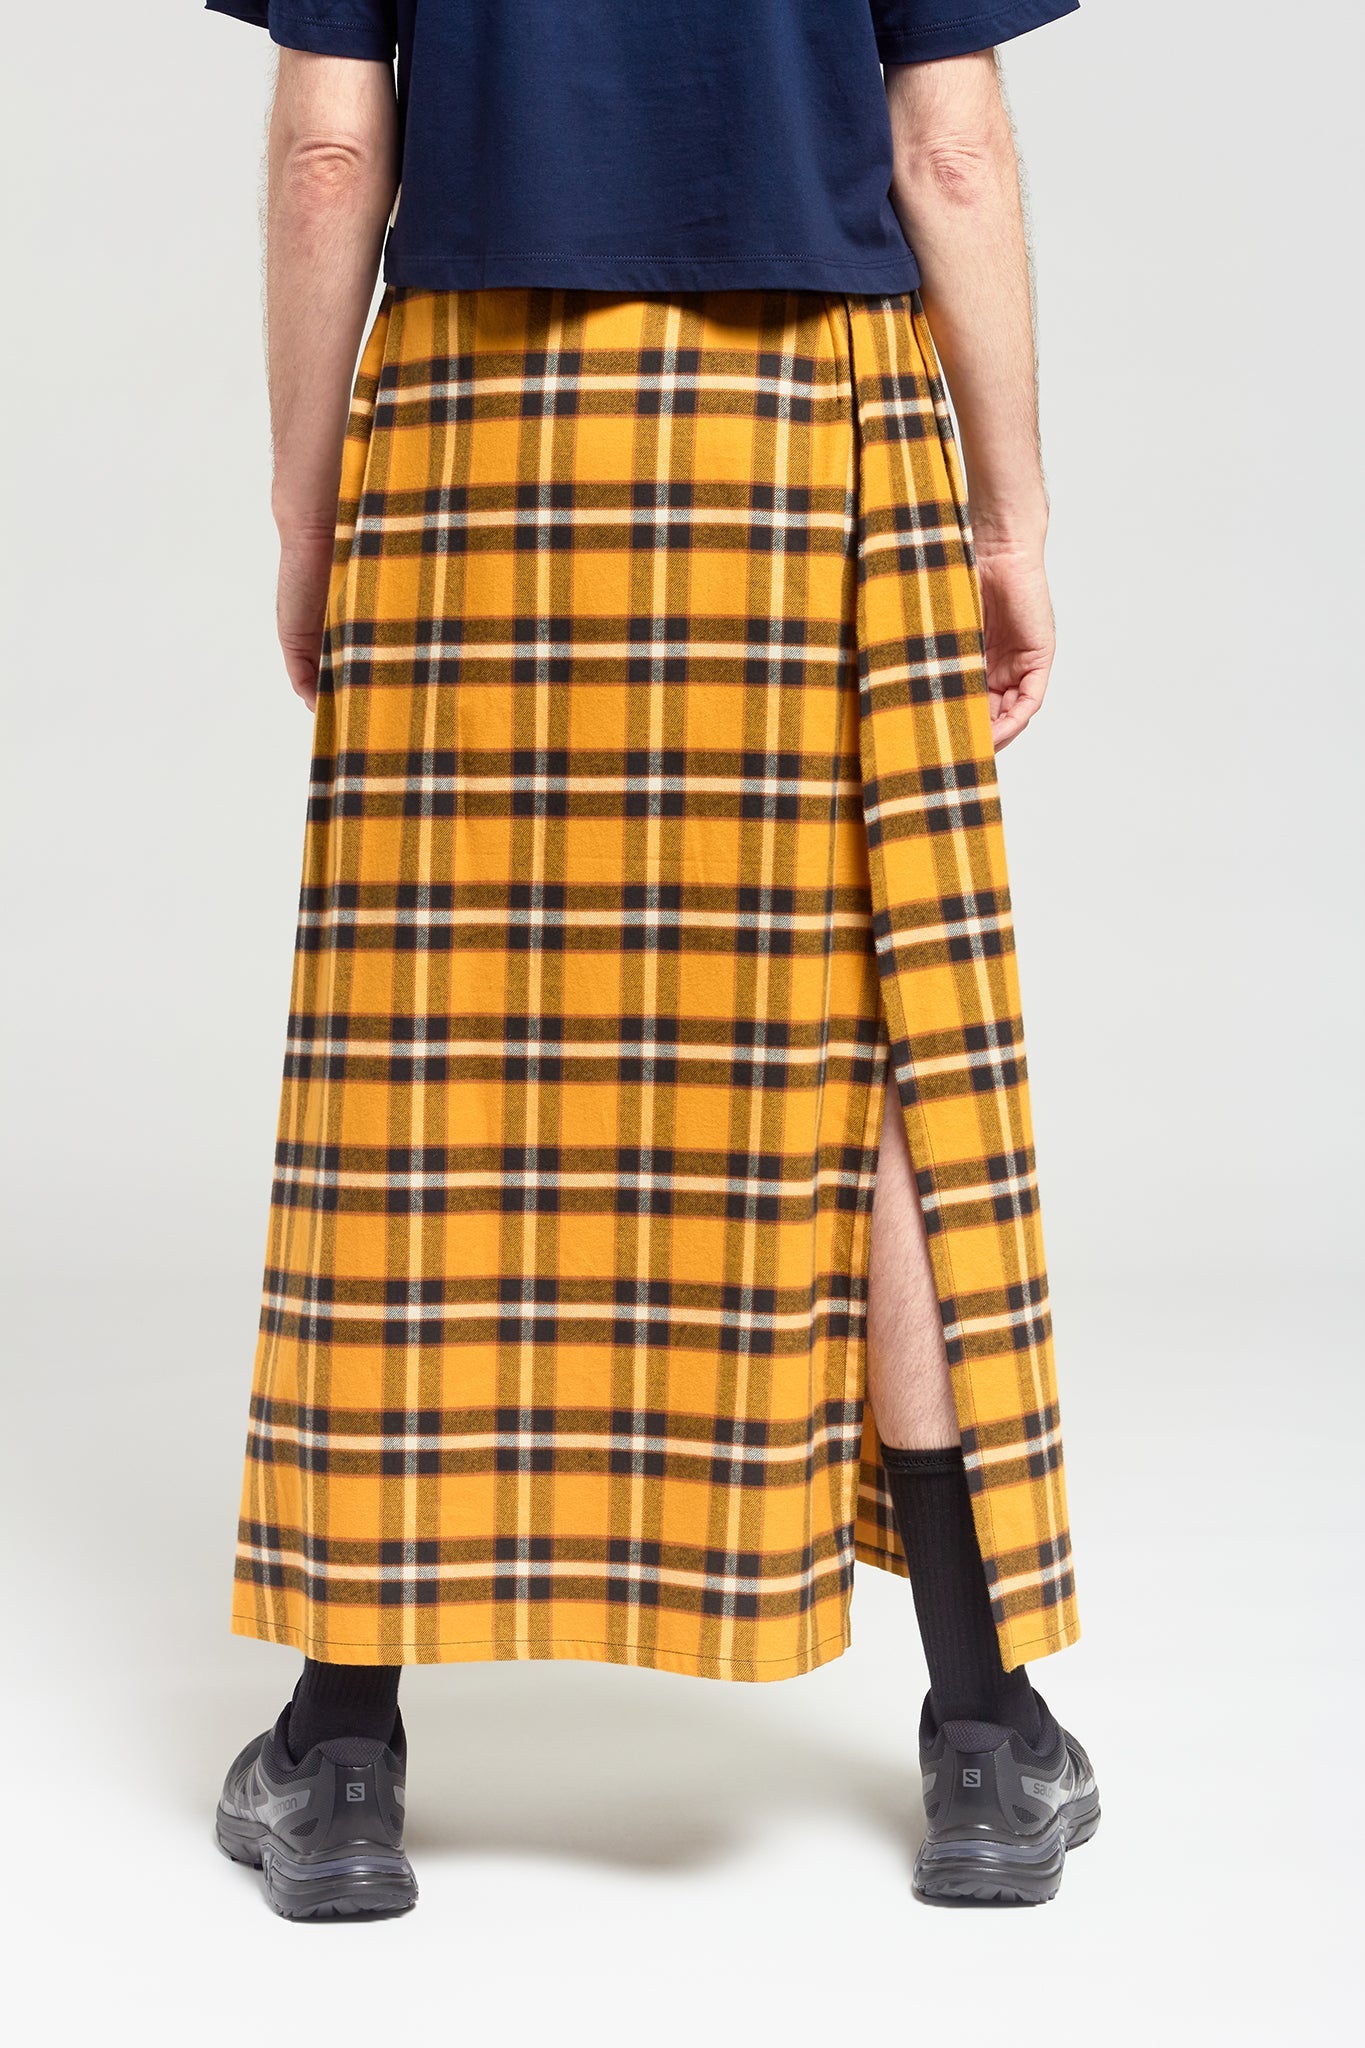 A.BCH A.25 Bolt Navy Marigold Plaid Skirt in Fine Flannel Japanese Organic Cotton